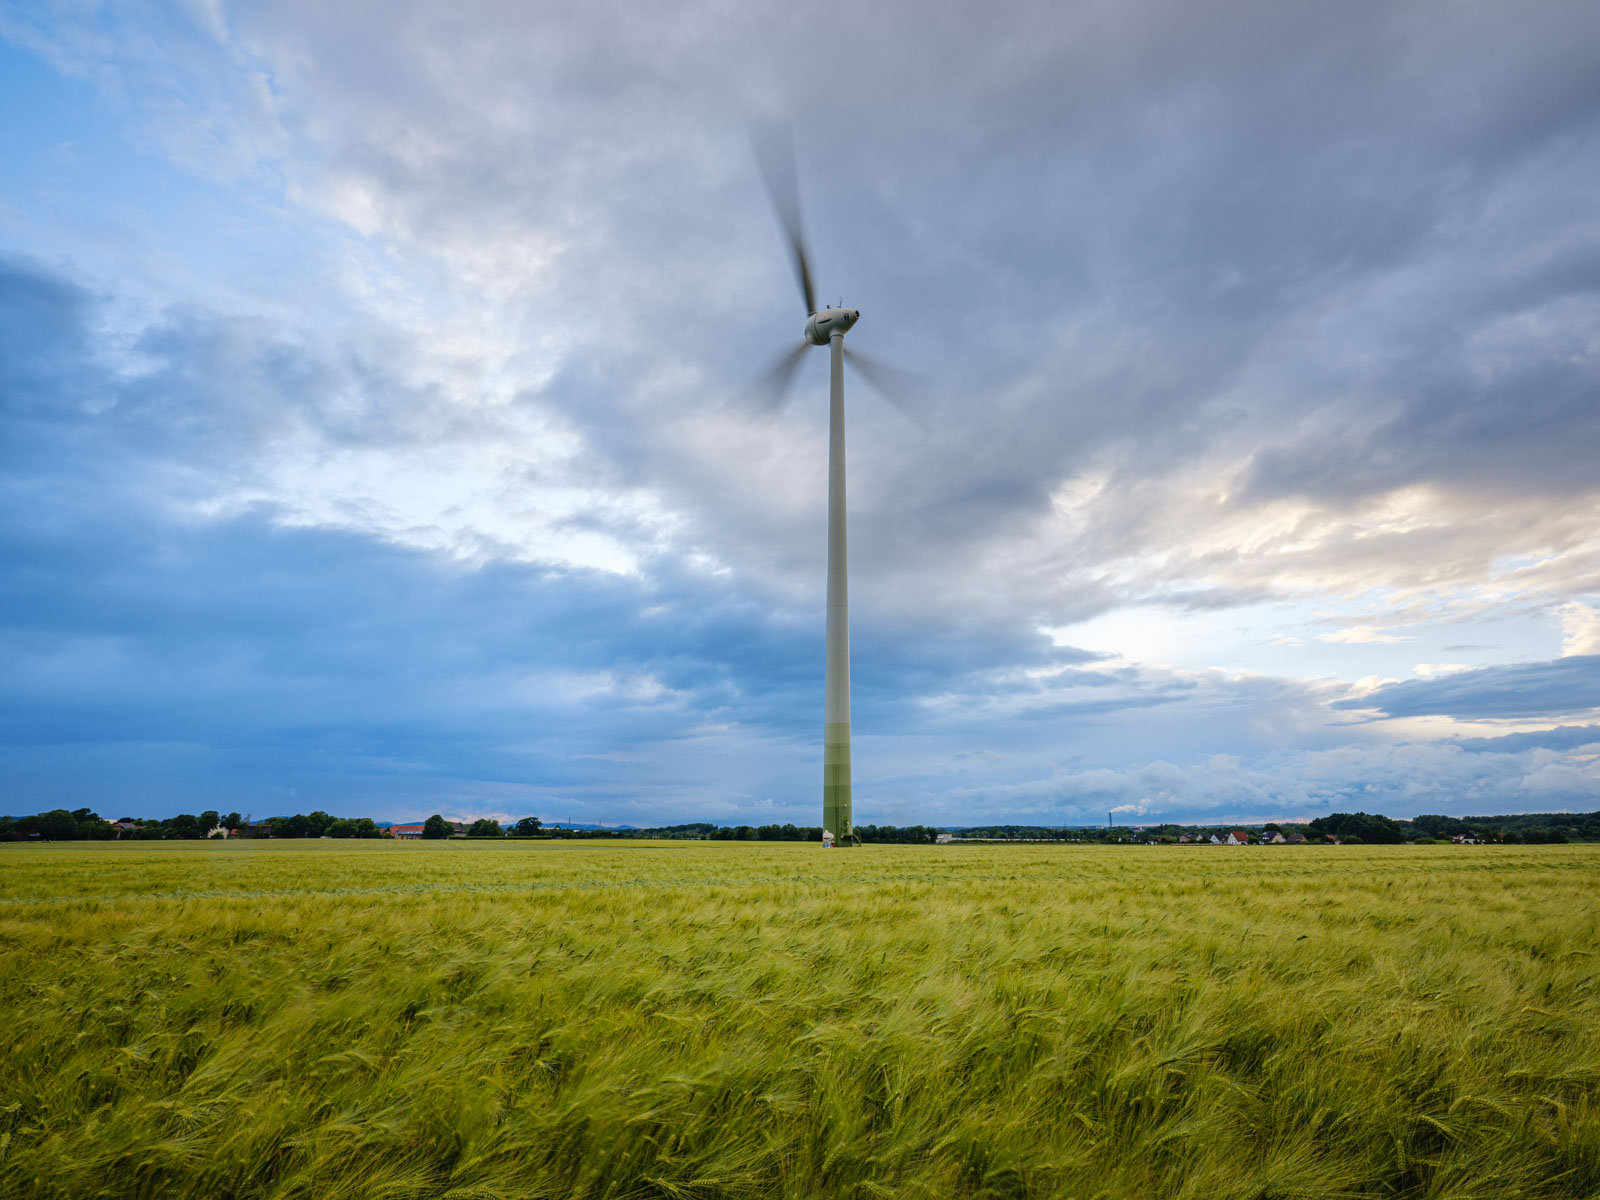 Wind turbine and cloudy sky near 'Brönninghausen' on an evening in June 2020 (Bielefeld, Germany).